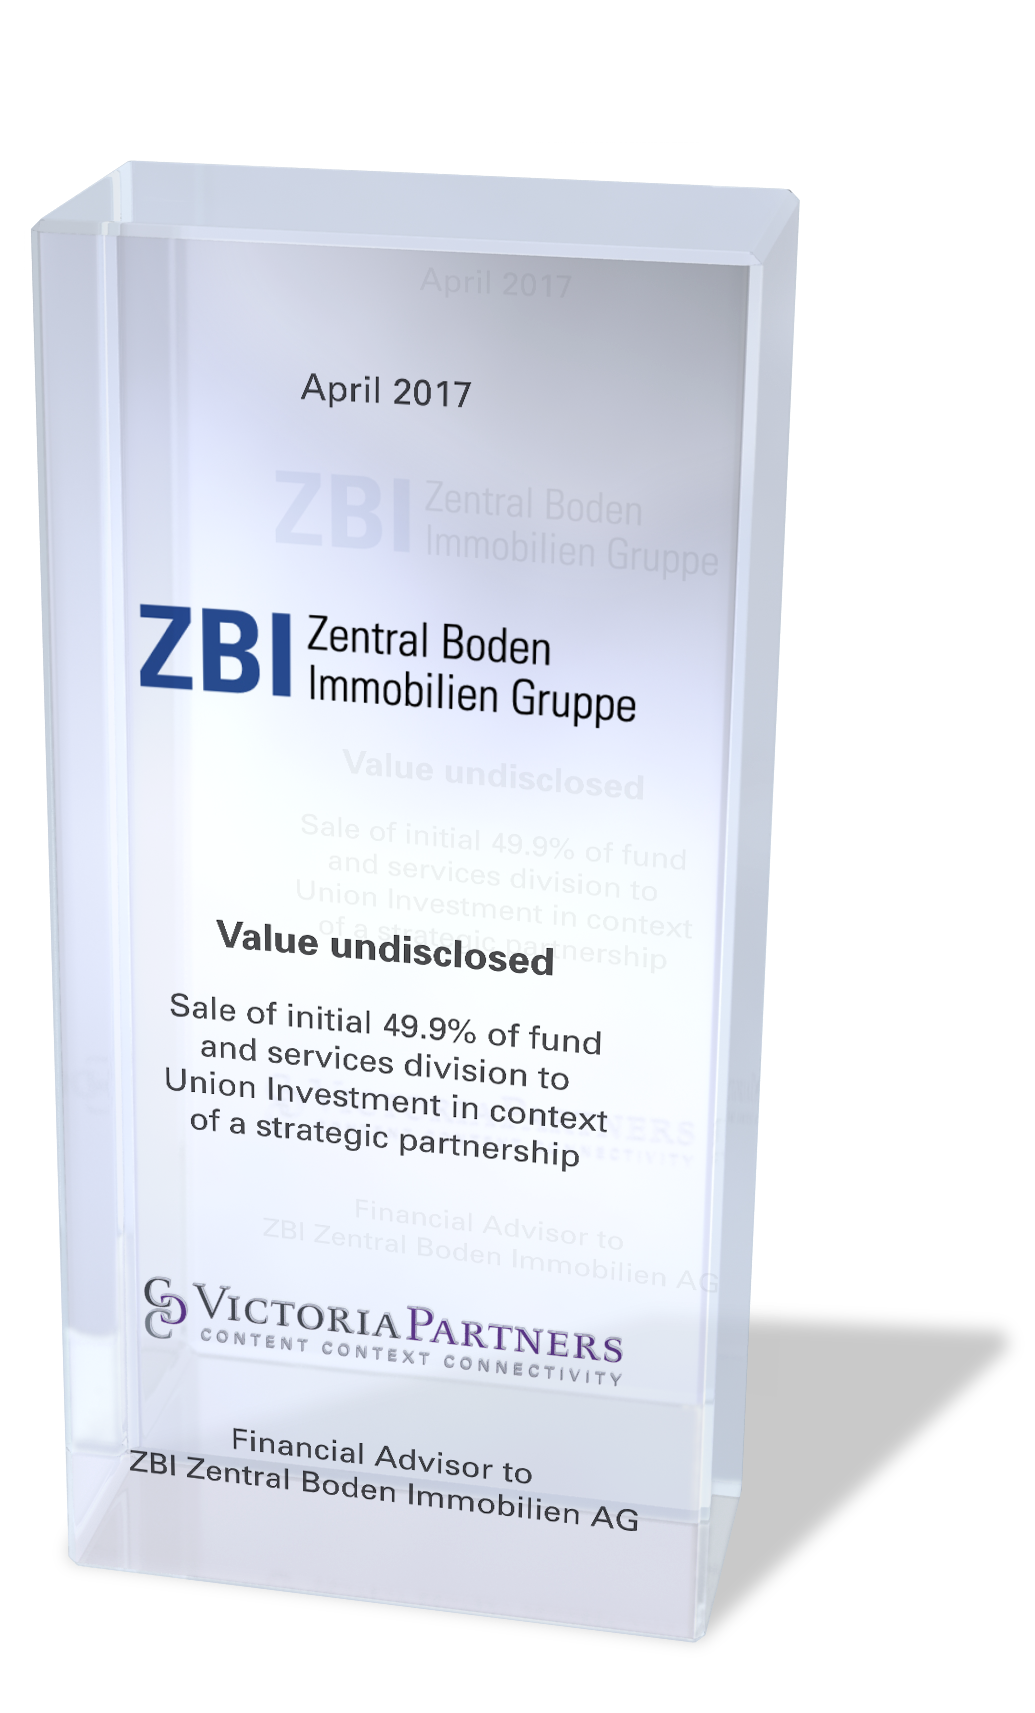 VICTORIAPARTNERS - Financial Advisor to ZBI Zentral Boden Immobilien AG - April 2017